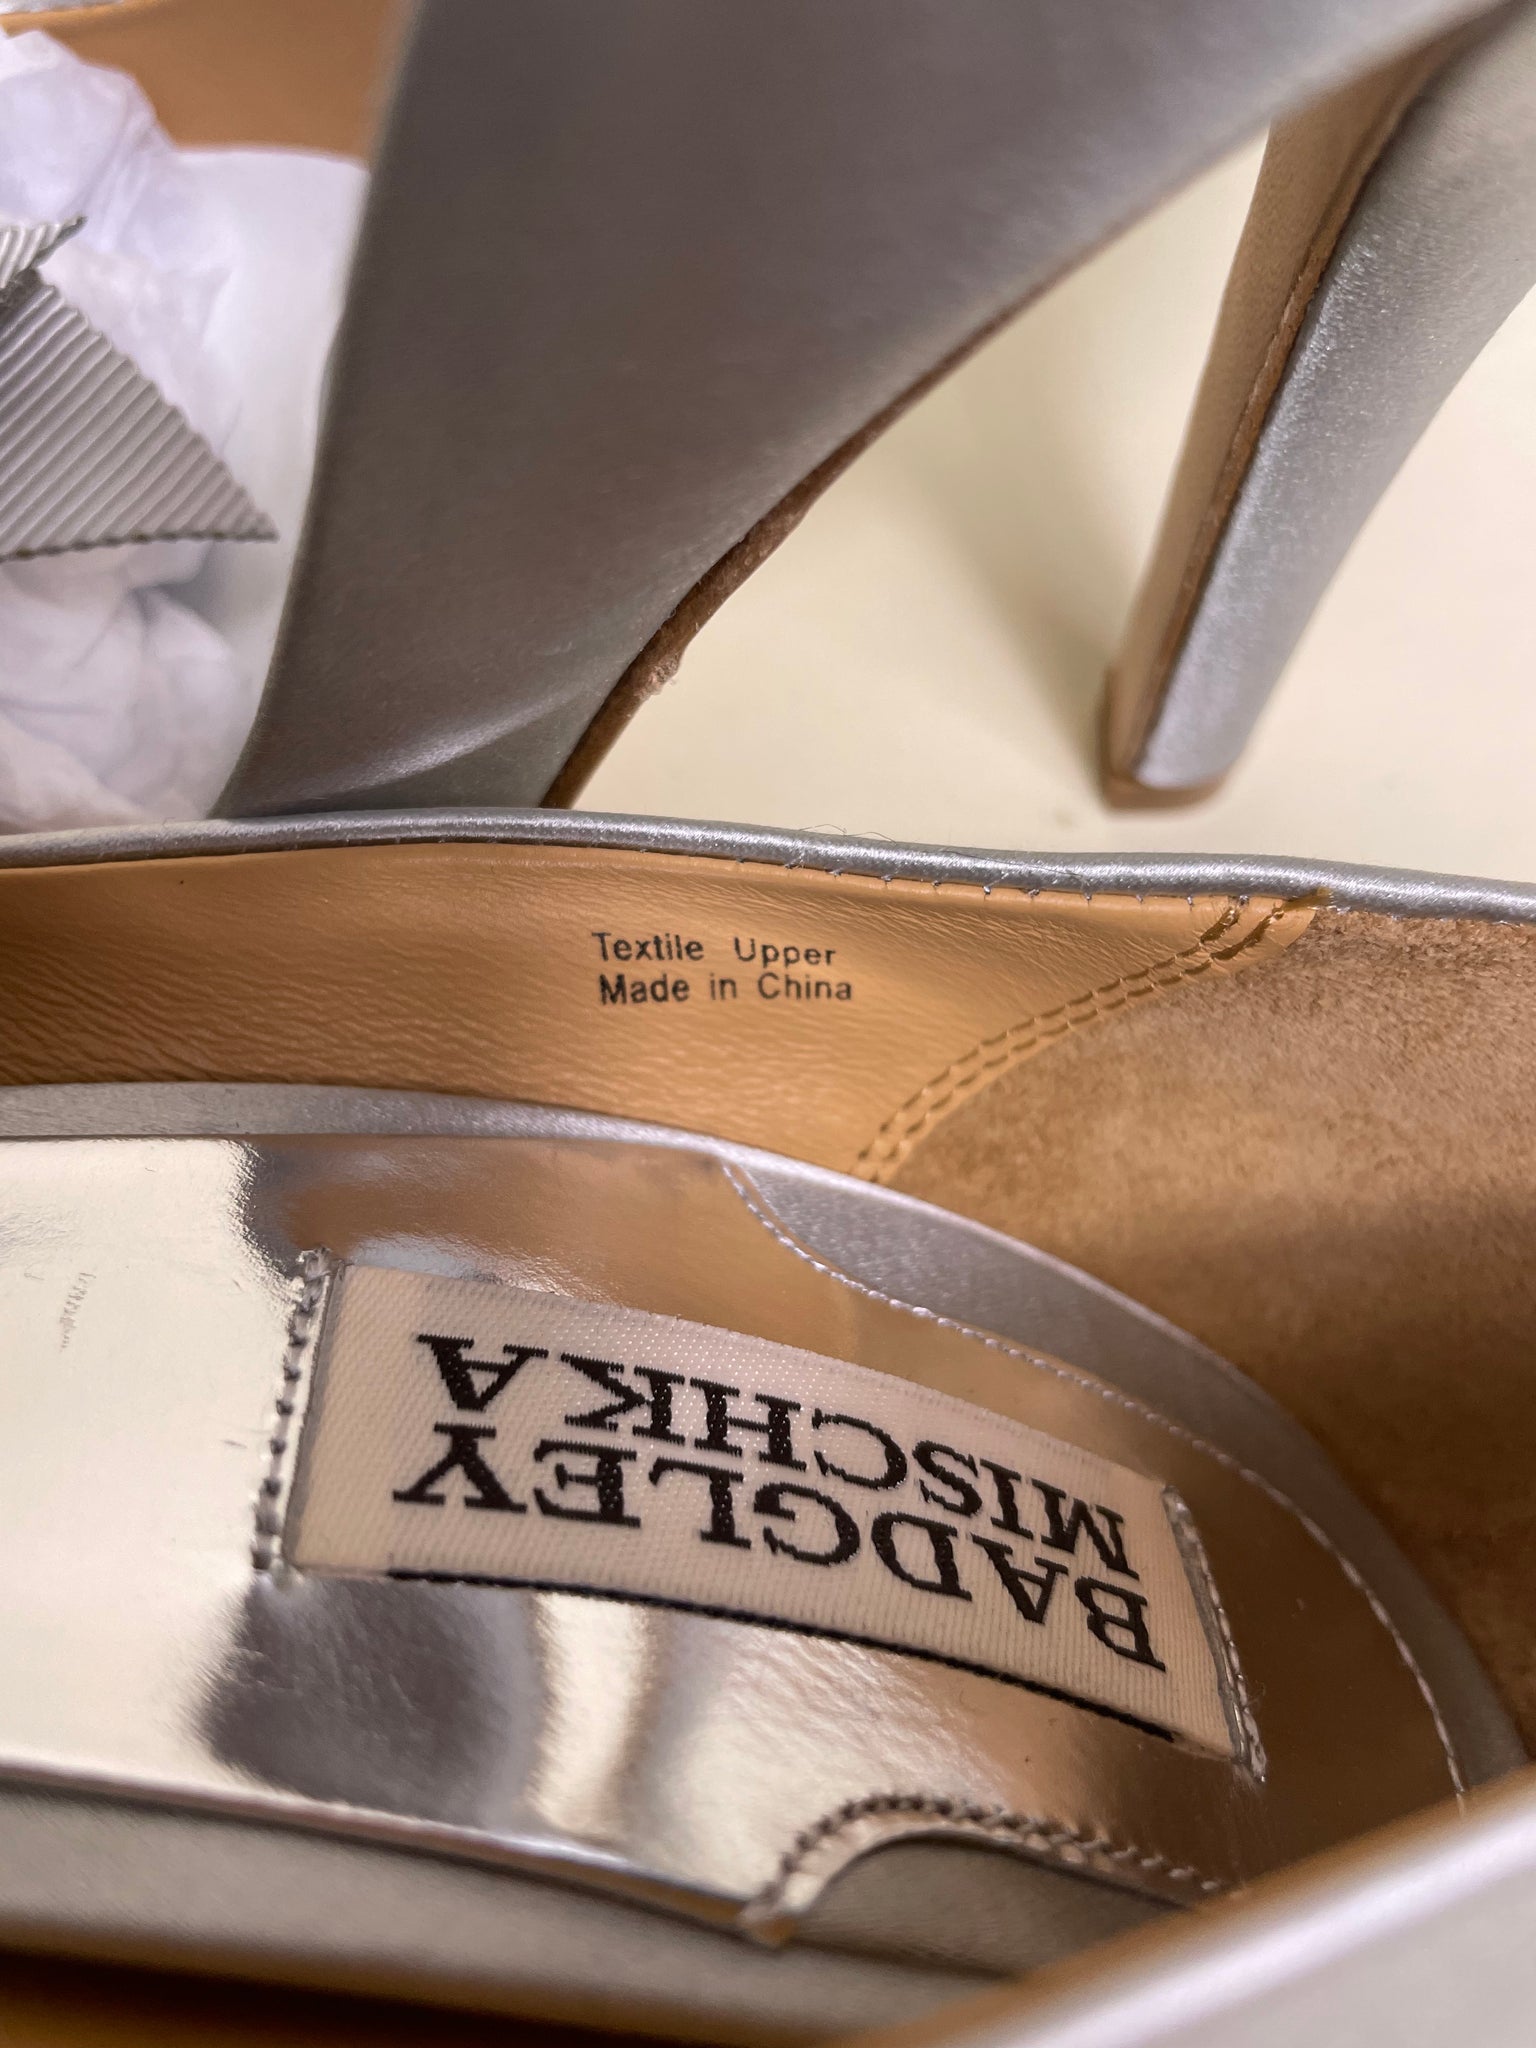 NEW Badgley Mischka heels, Size 7